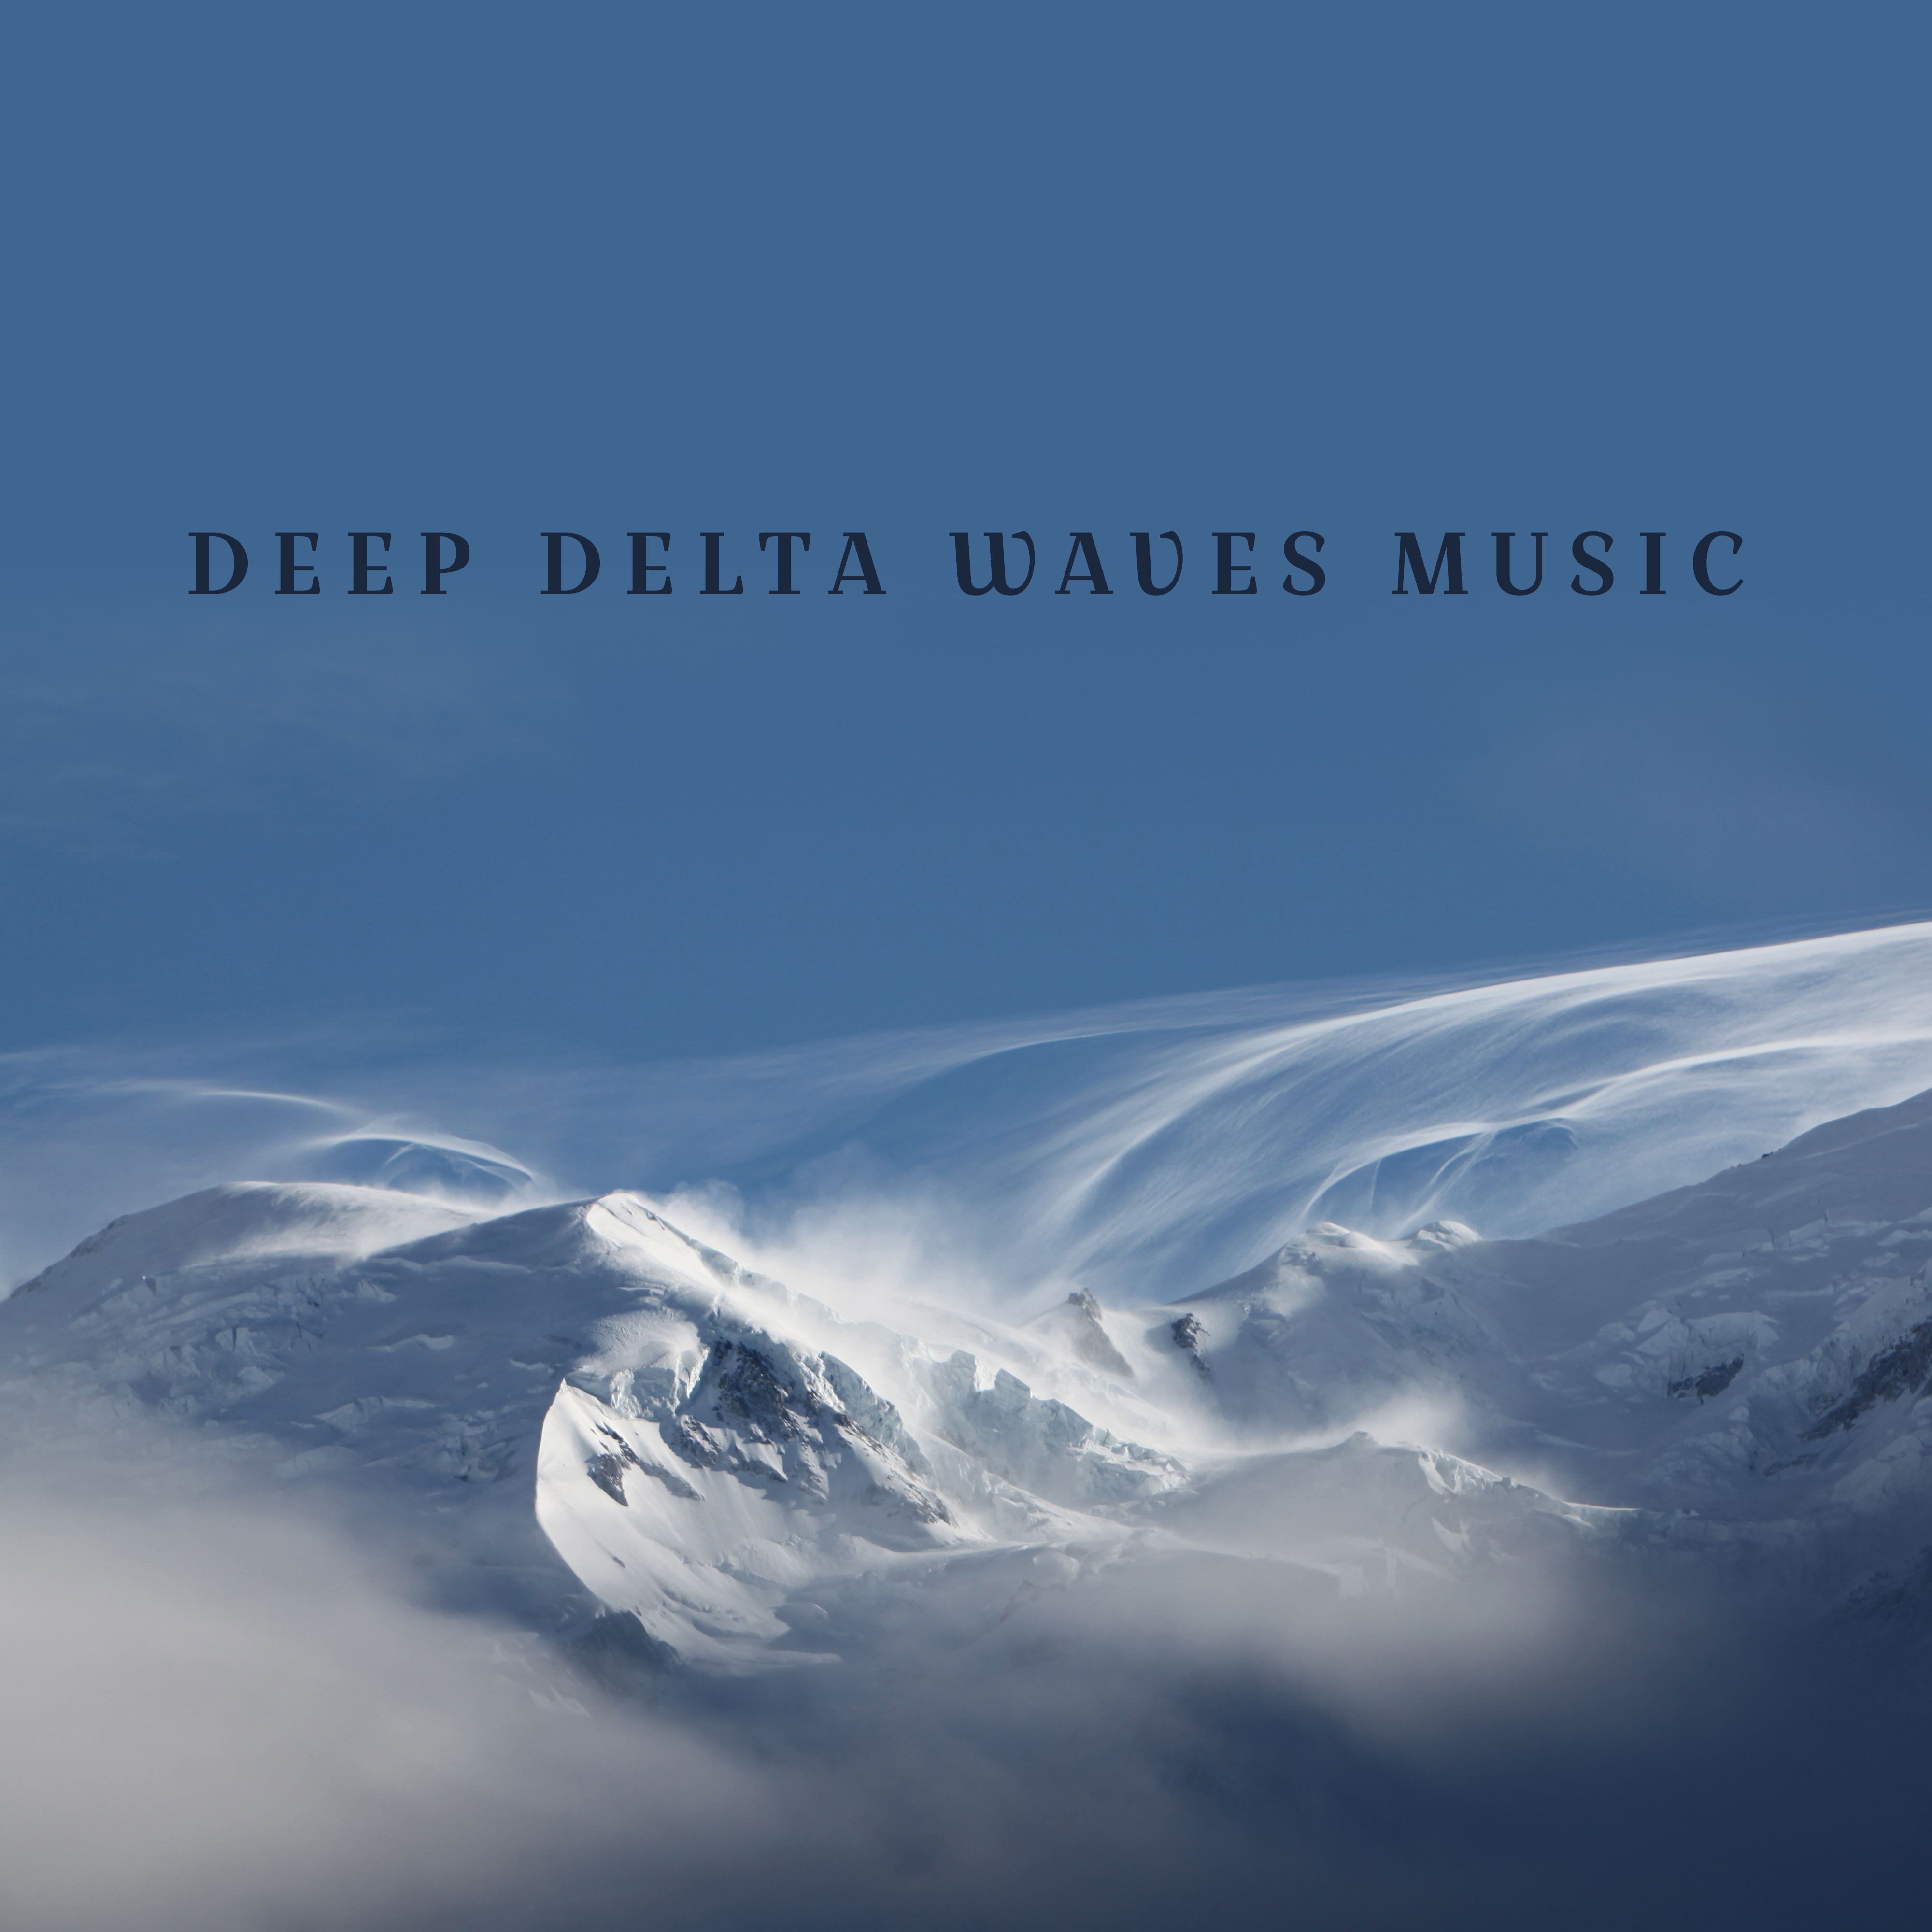 Deep Delta Waves Music